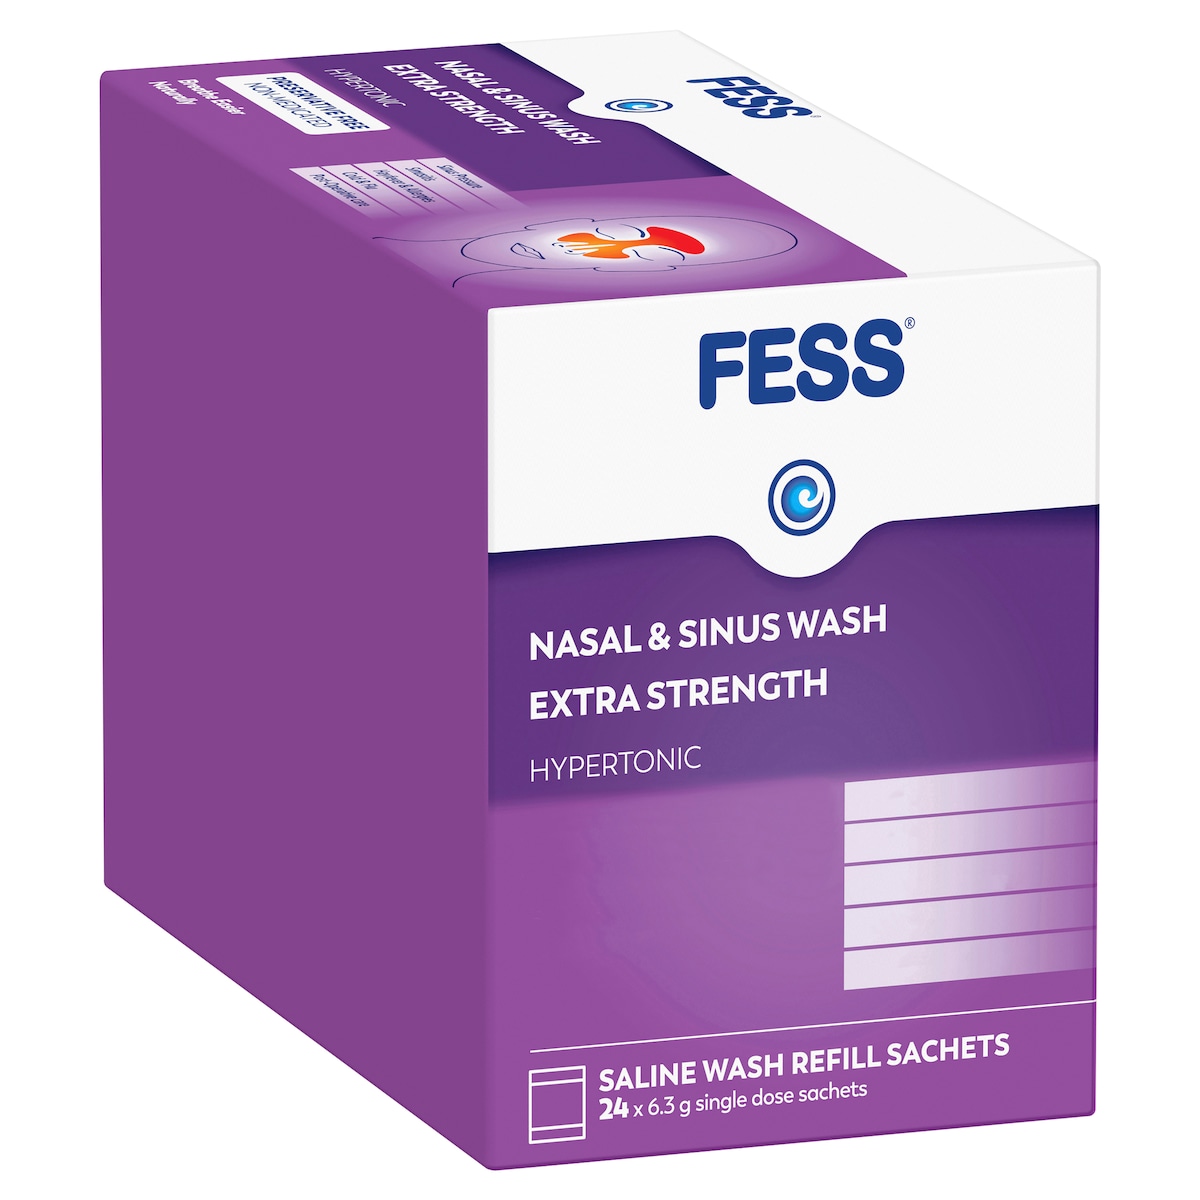 Fess Nasal & Sinus Wash Extra Strength Refill Sachet 24 Pack